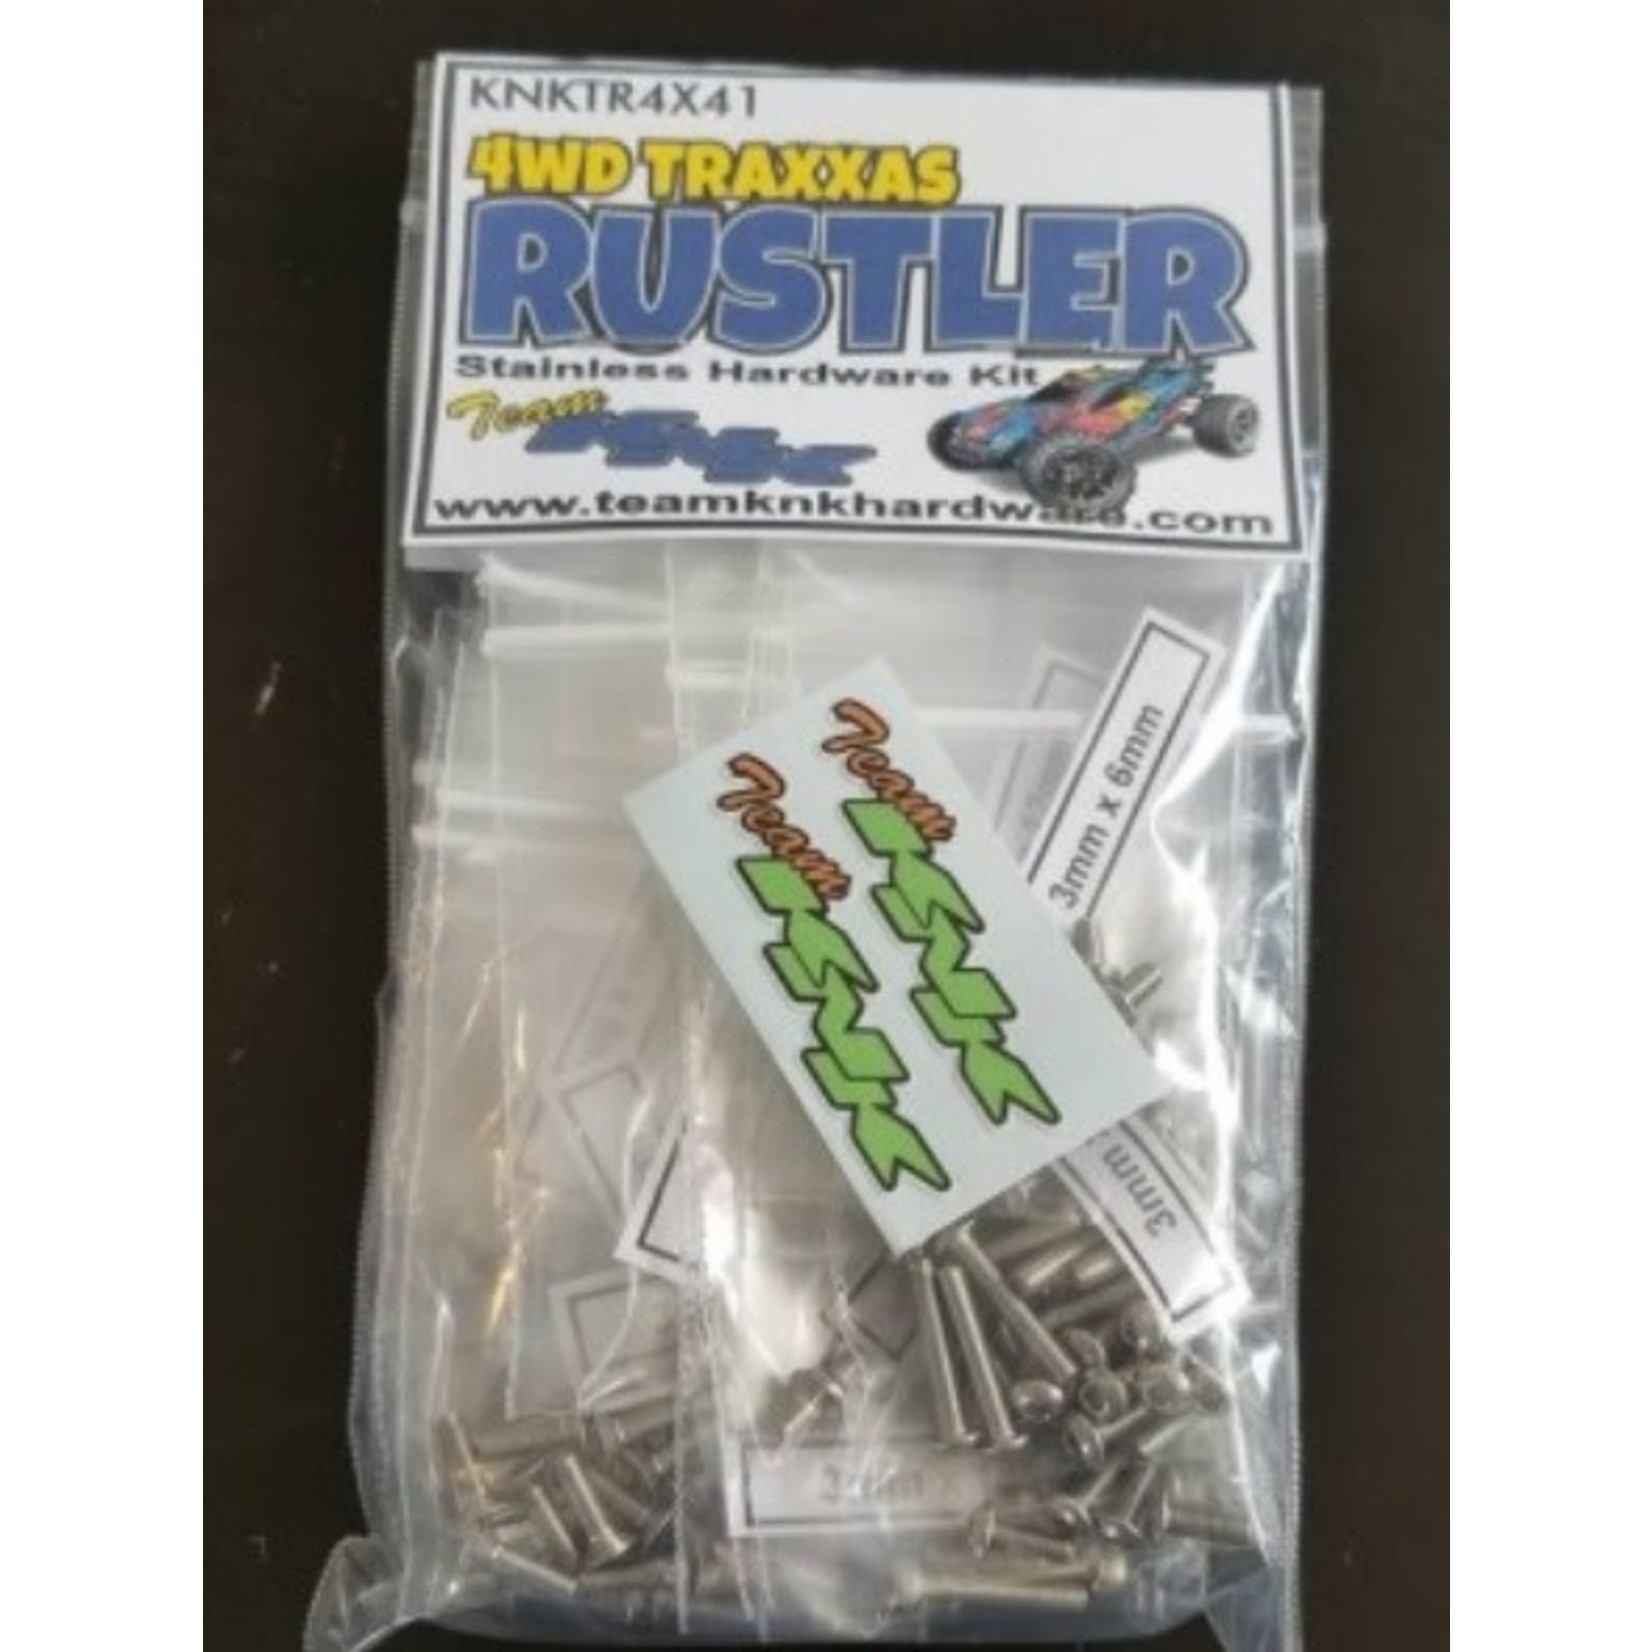 Team KNK Team KNK Traxxas Rustler 4x4 Stainless Hardware Kit # KNKTR4X41